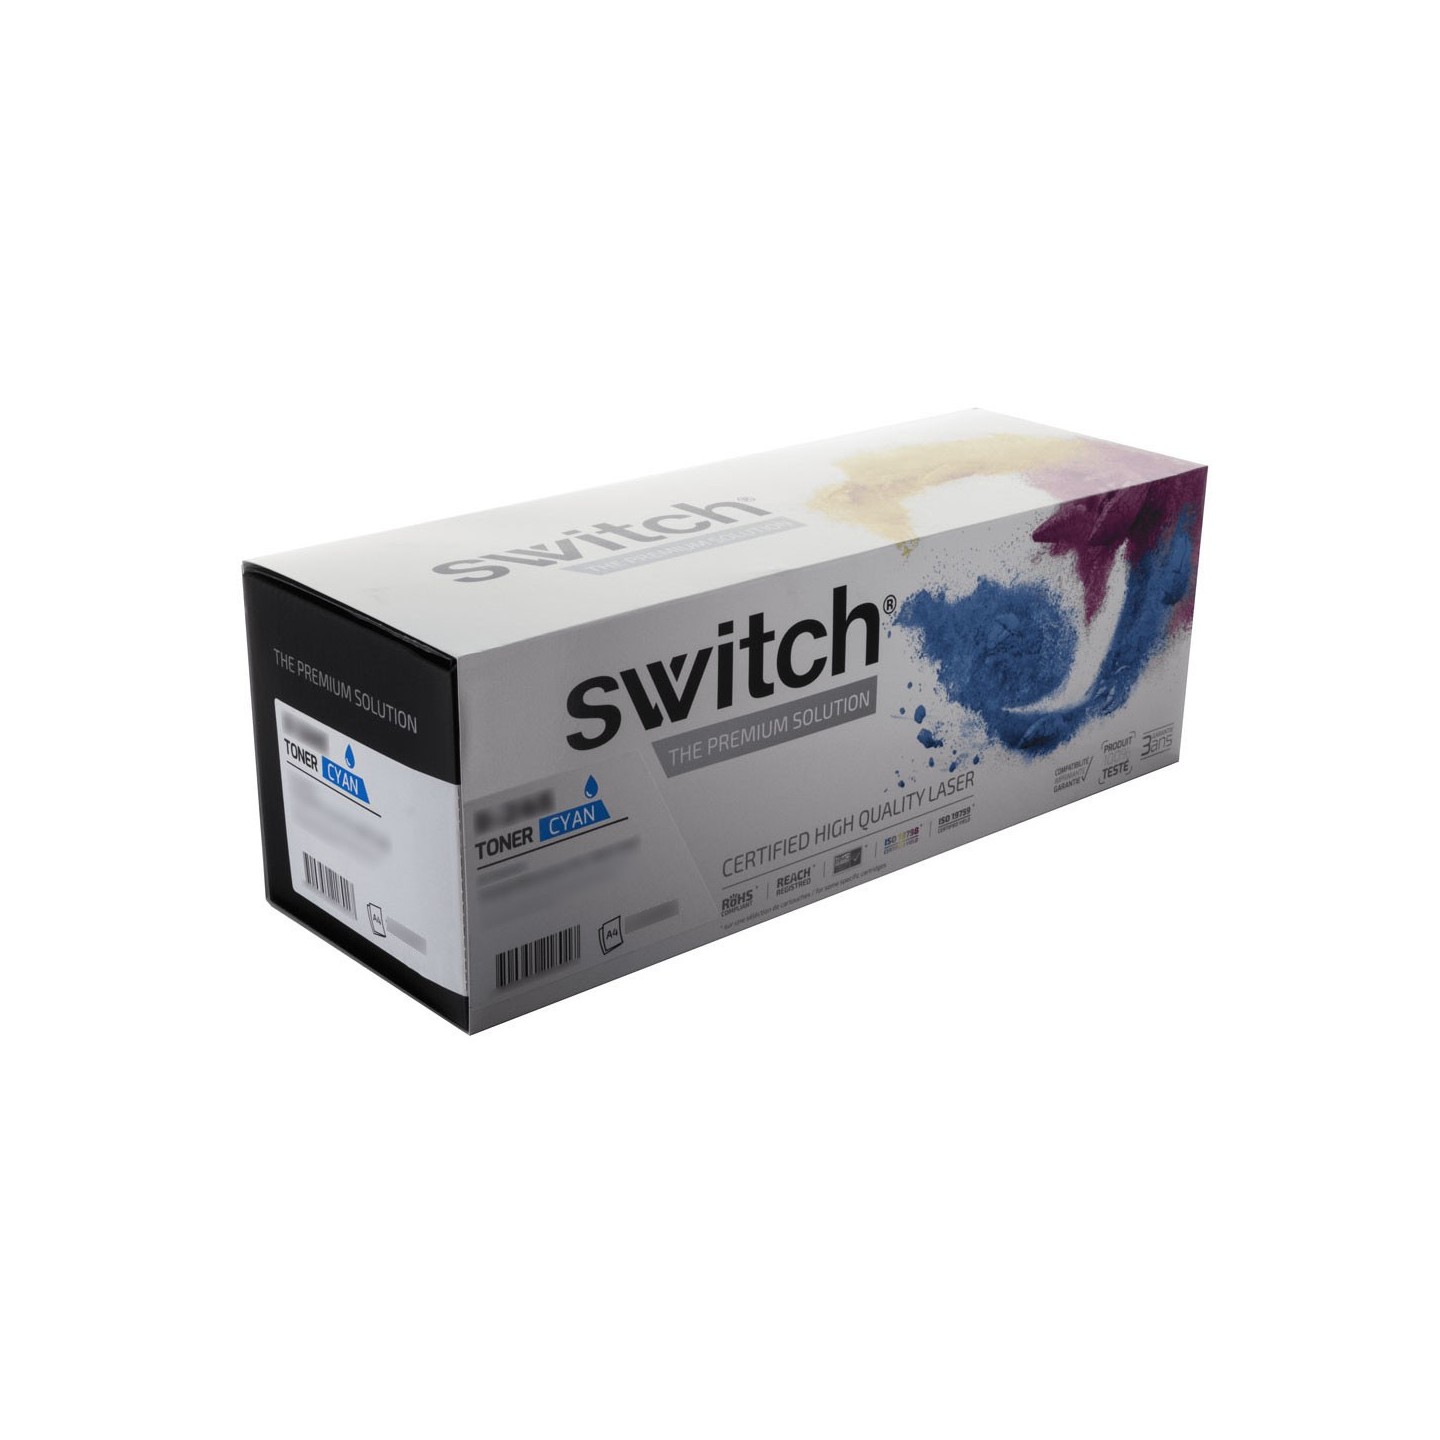 SWITCH Toner compatible avec W2031X, 415X - Cyan